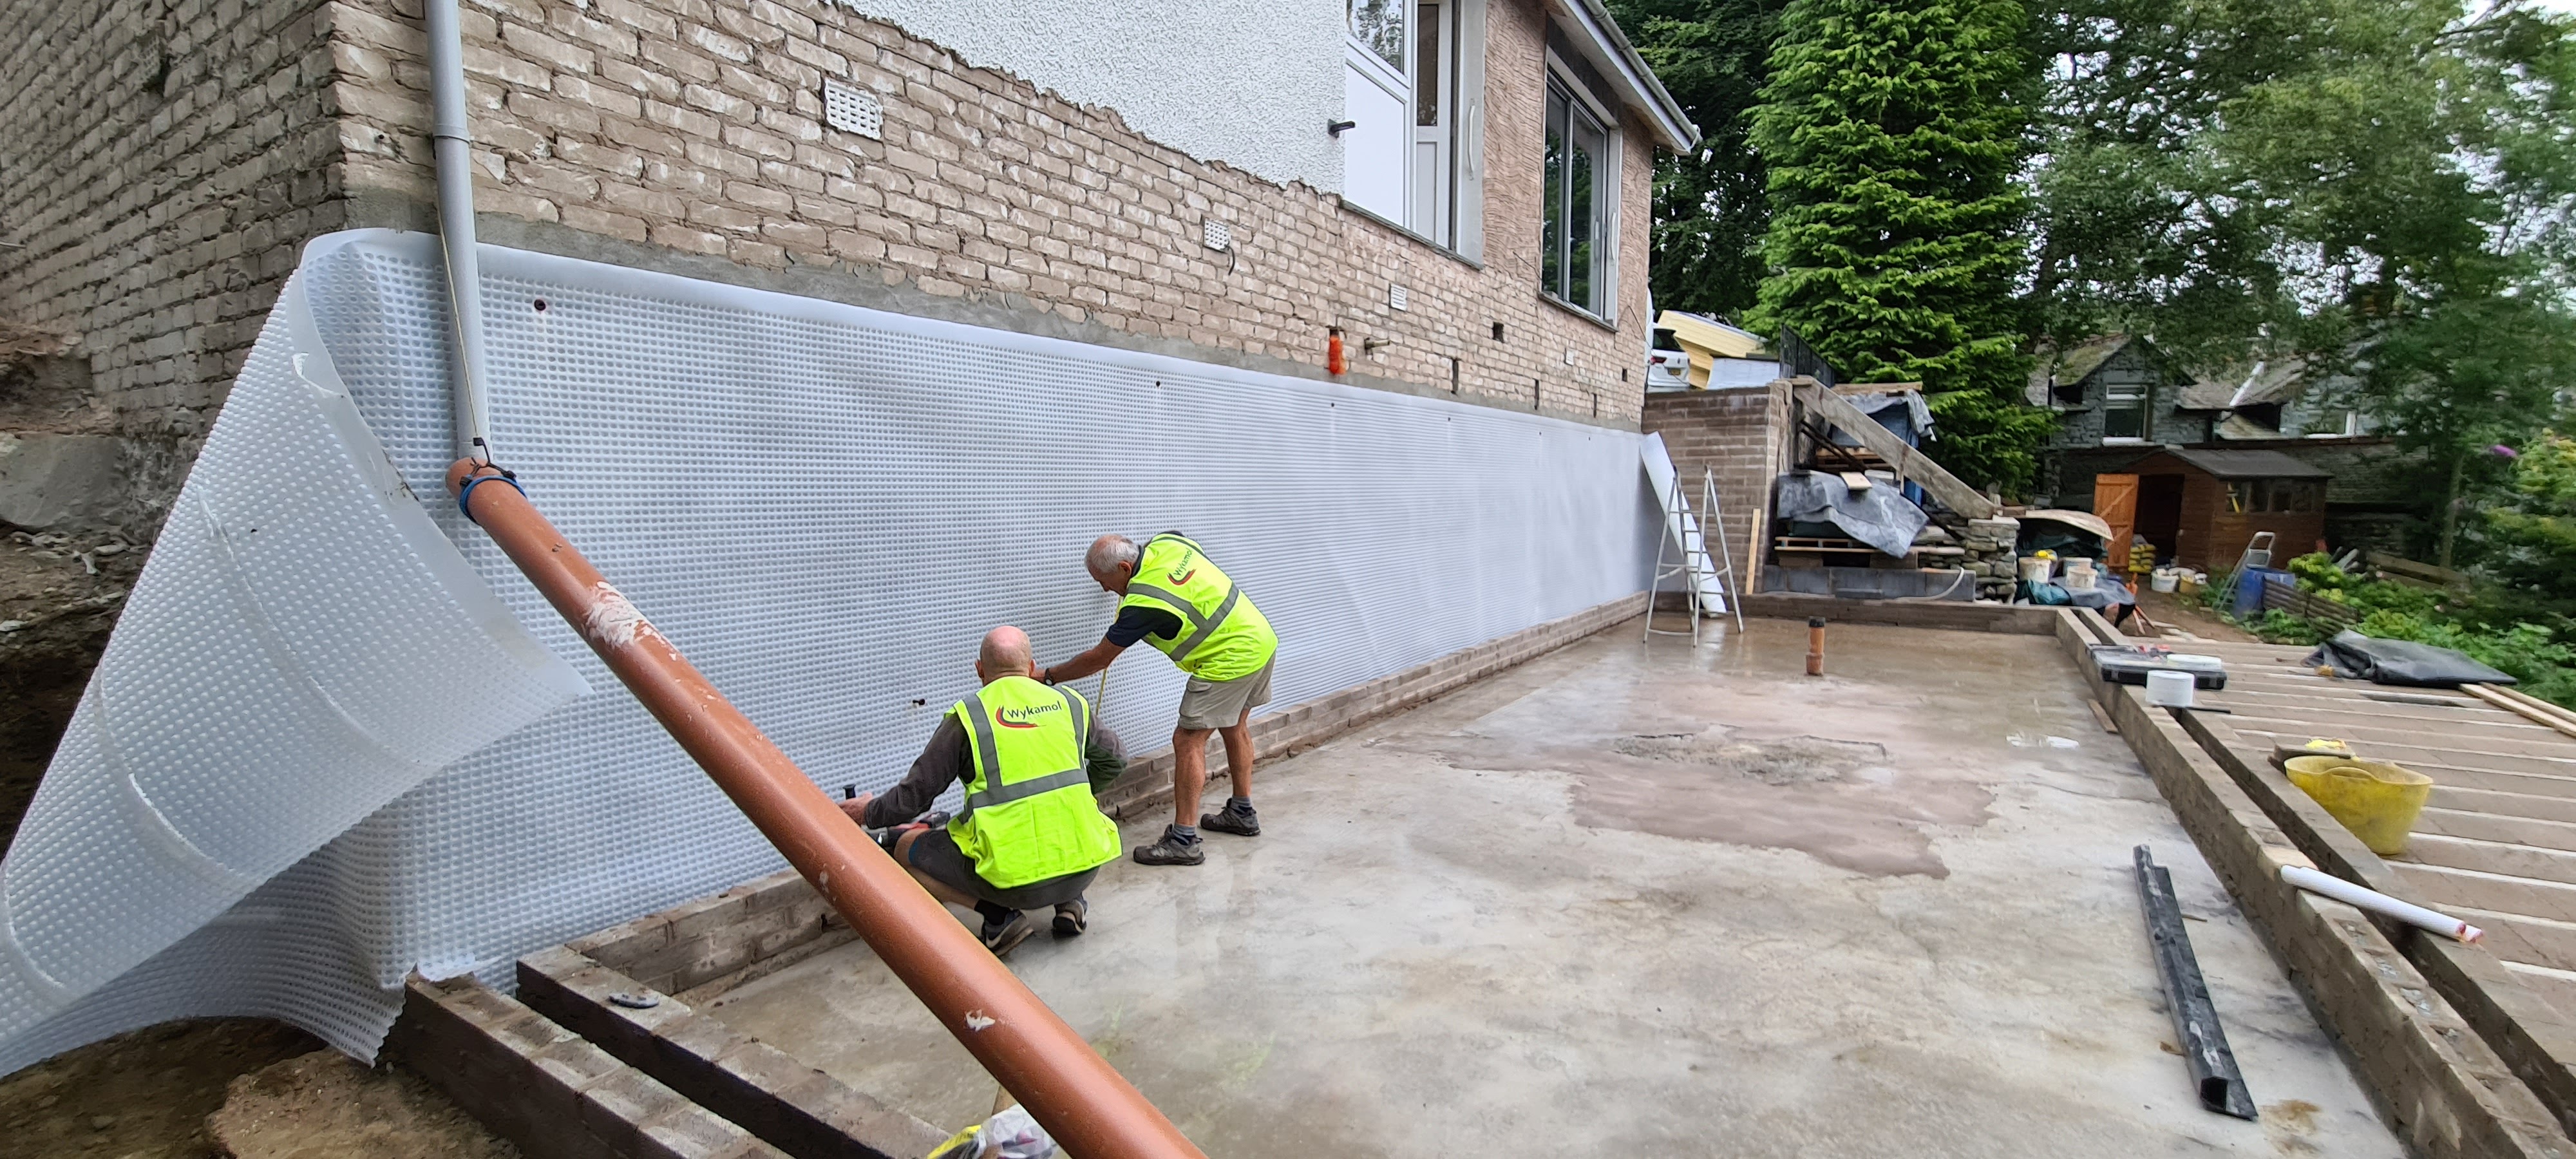 Ambleside Lake District home gets a waterproof basement extension